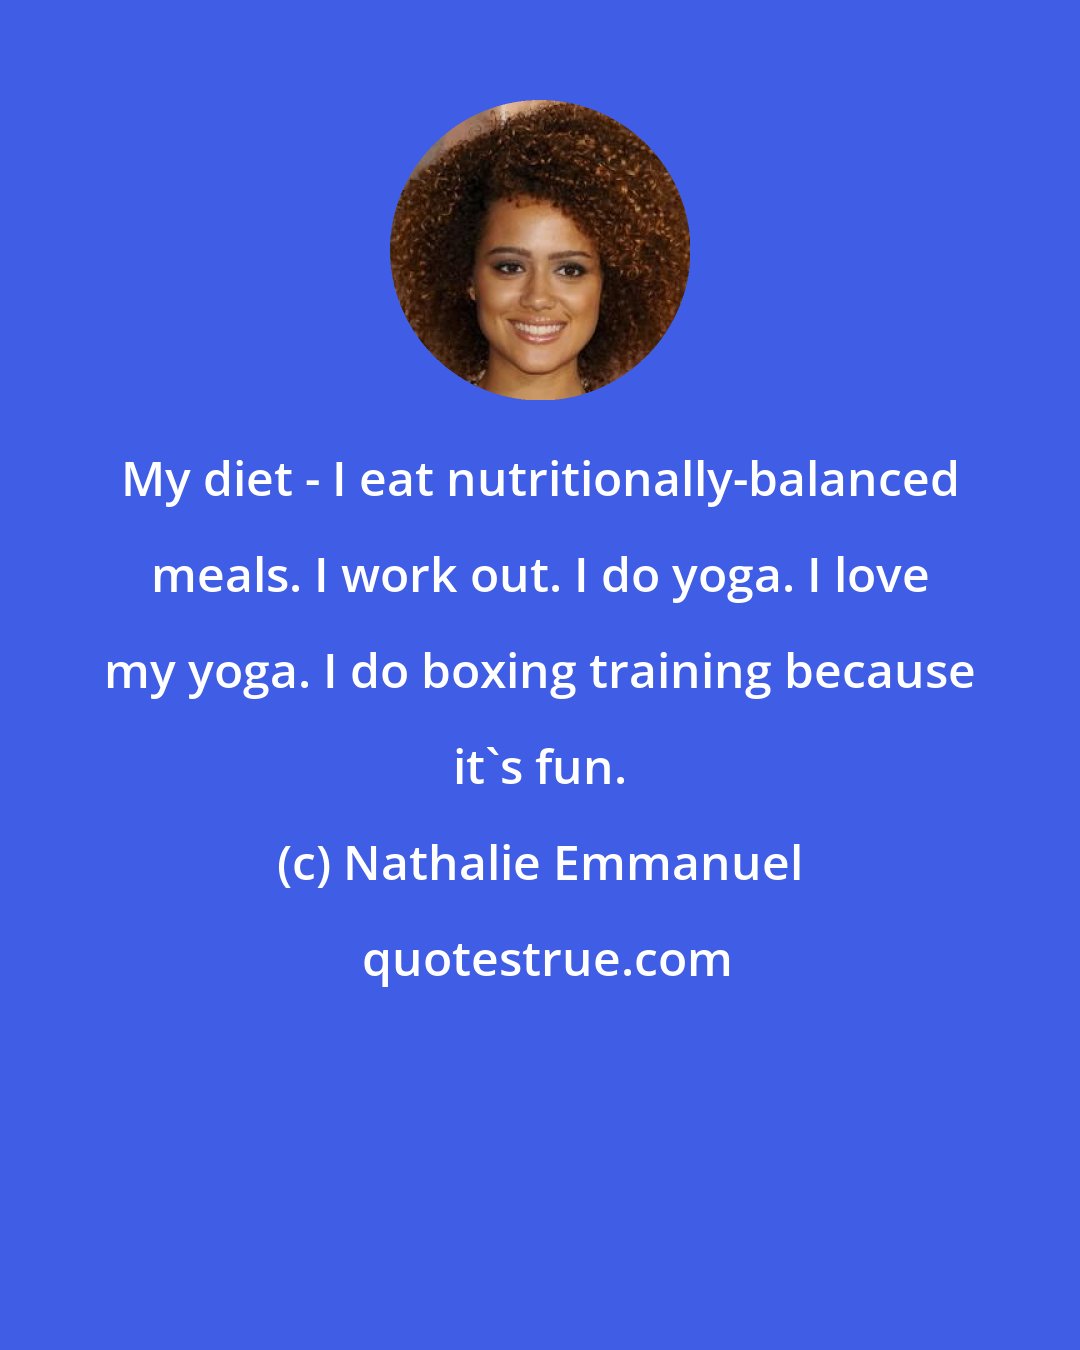 Nathalie Emmanuel: My diet - I eat nutritionally-balanced meals. I work out. I do yoga. I love my yoga. I do boxing training because it's fun.